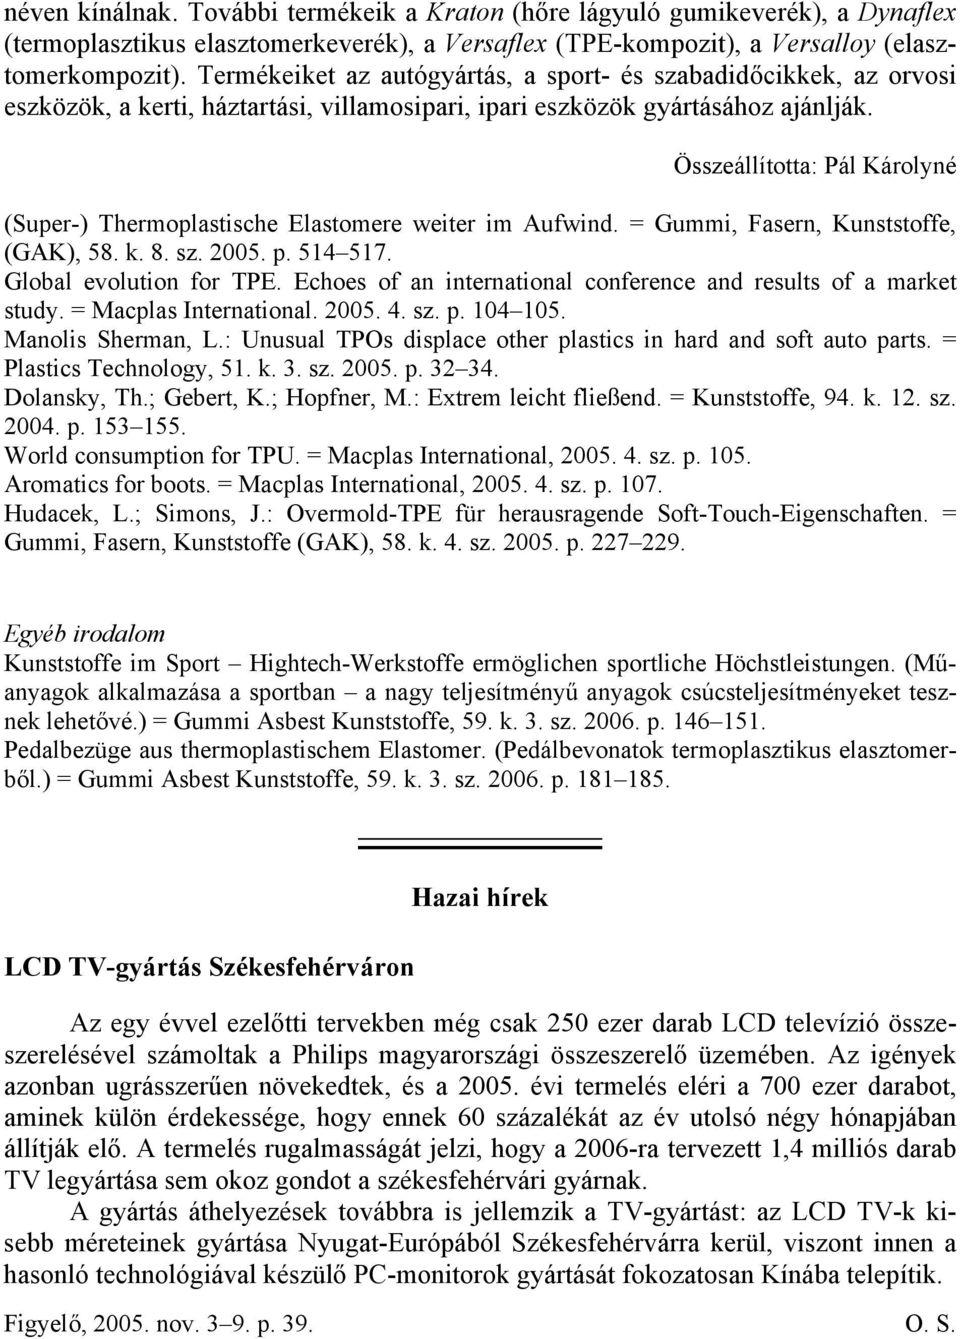 Összeállította: Pál Károlyné (Super-) Thermoplastische Elastomere weiter im Aufwind. = Gummi, Fasern, Kunststoffe, (GAK), 58. k. 8. sz. 25. p. 514 517. Global evolution for TPE.